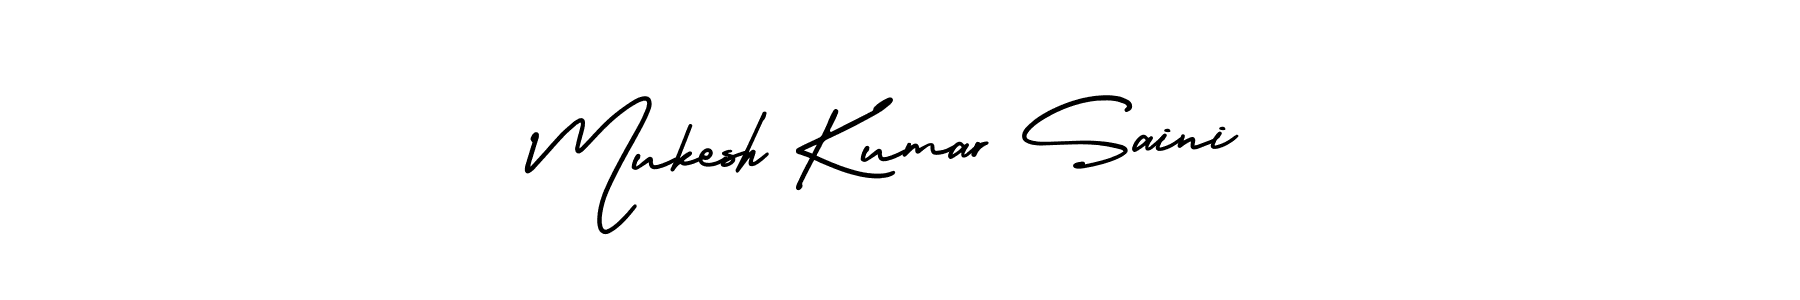 Use a signature maker to create a handwritten signature online. With this signature software, you can design (AmerikaSignatureDemo-Regular) your own signature for name Mukesh Kumar Saini. Mukesh Kumar Saini signature style 3 images and pictures png